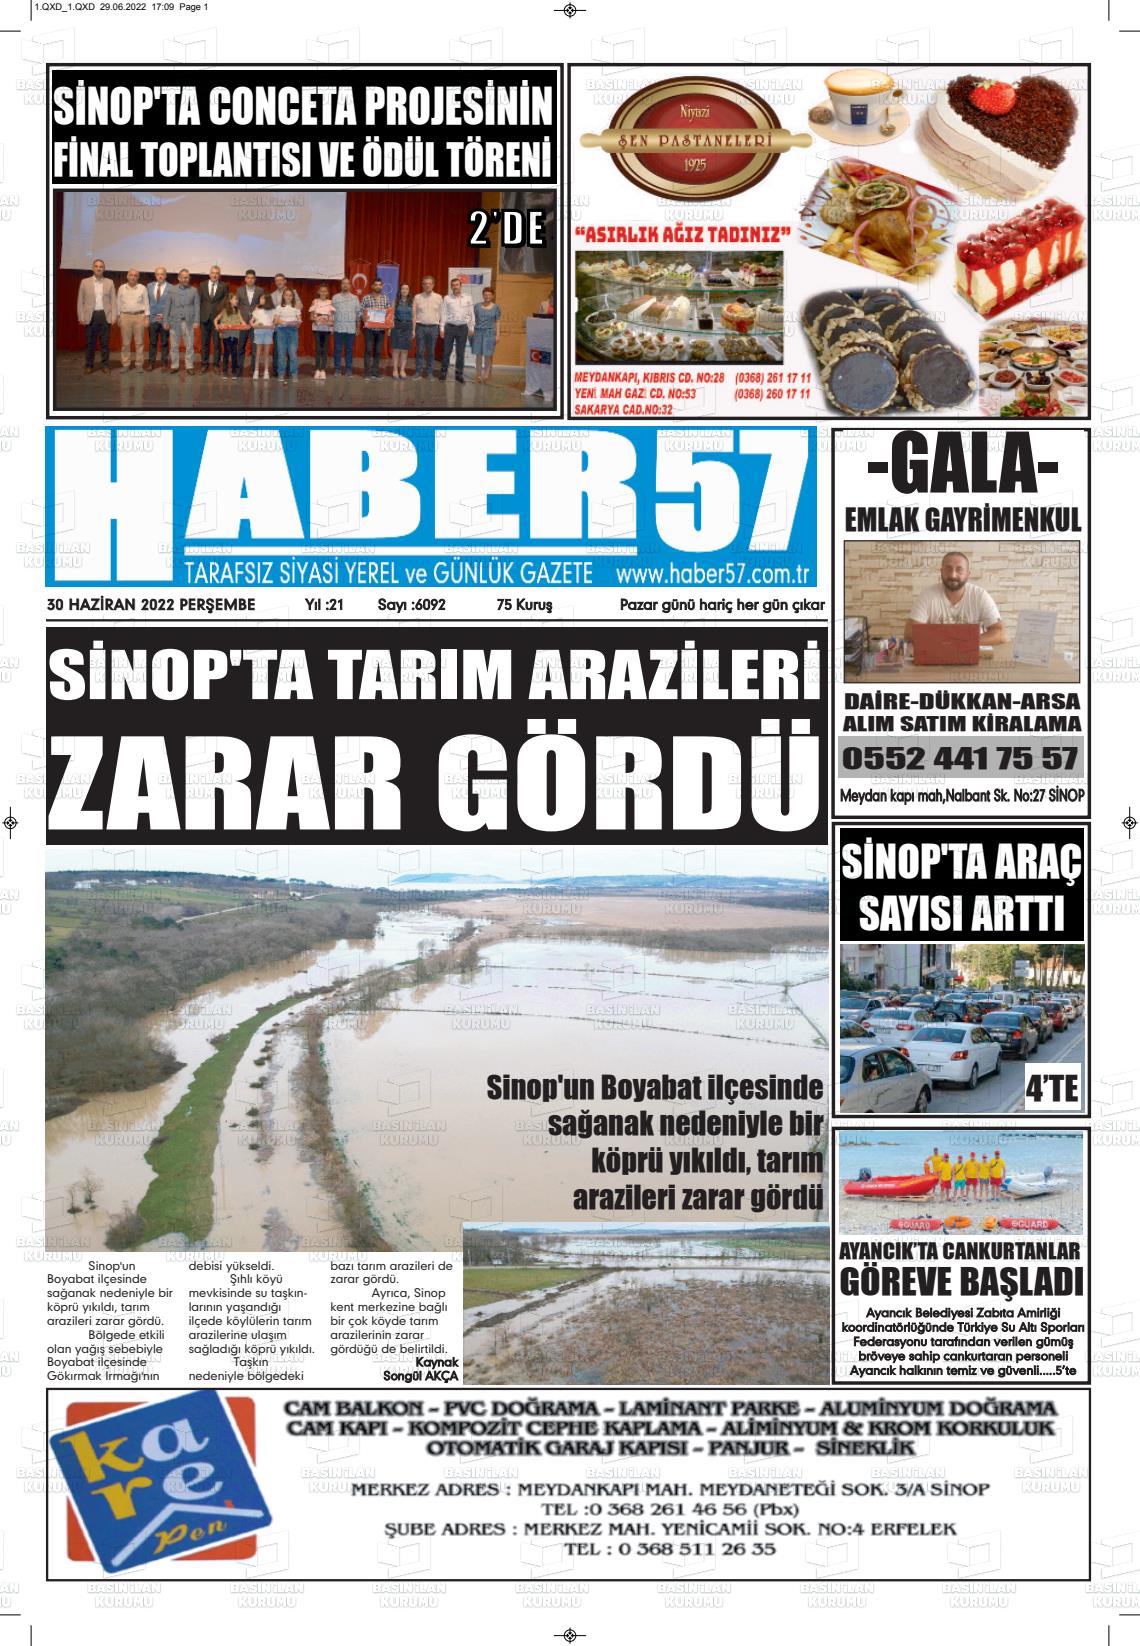 02 Temmuz 2022 Haber 57 Gazete Manşeti